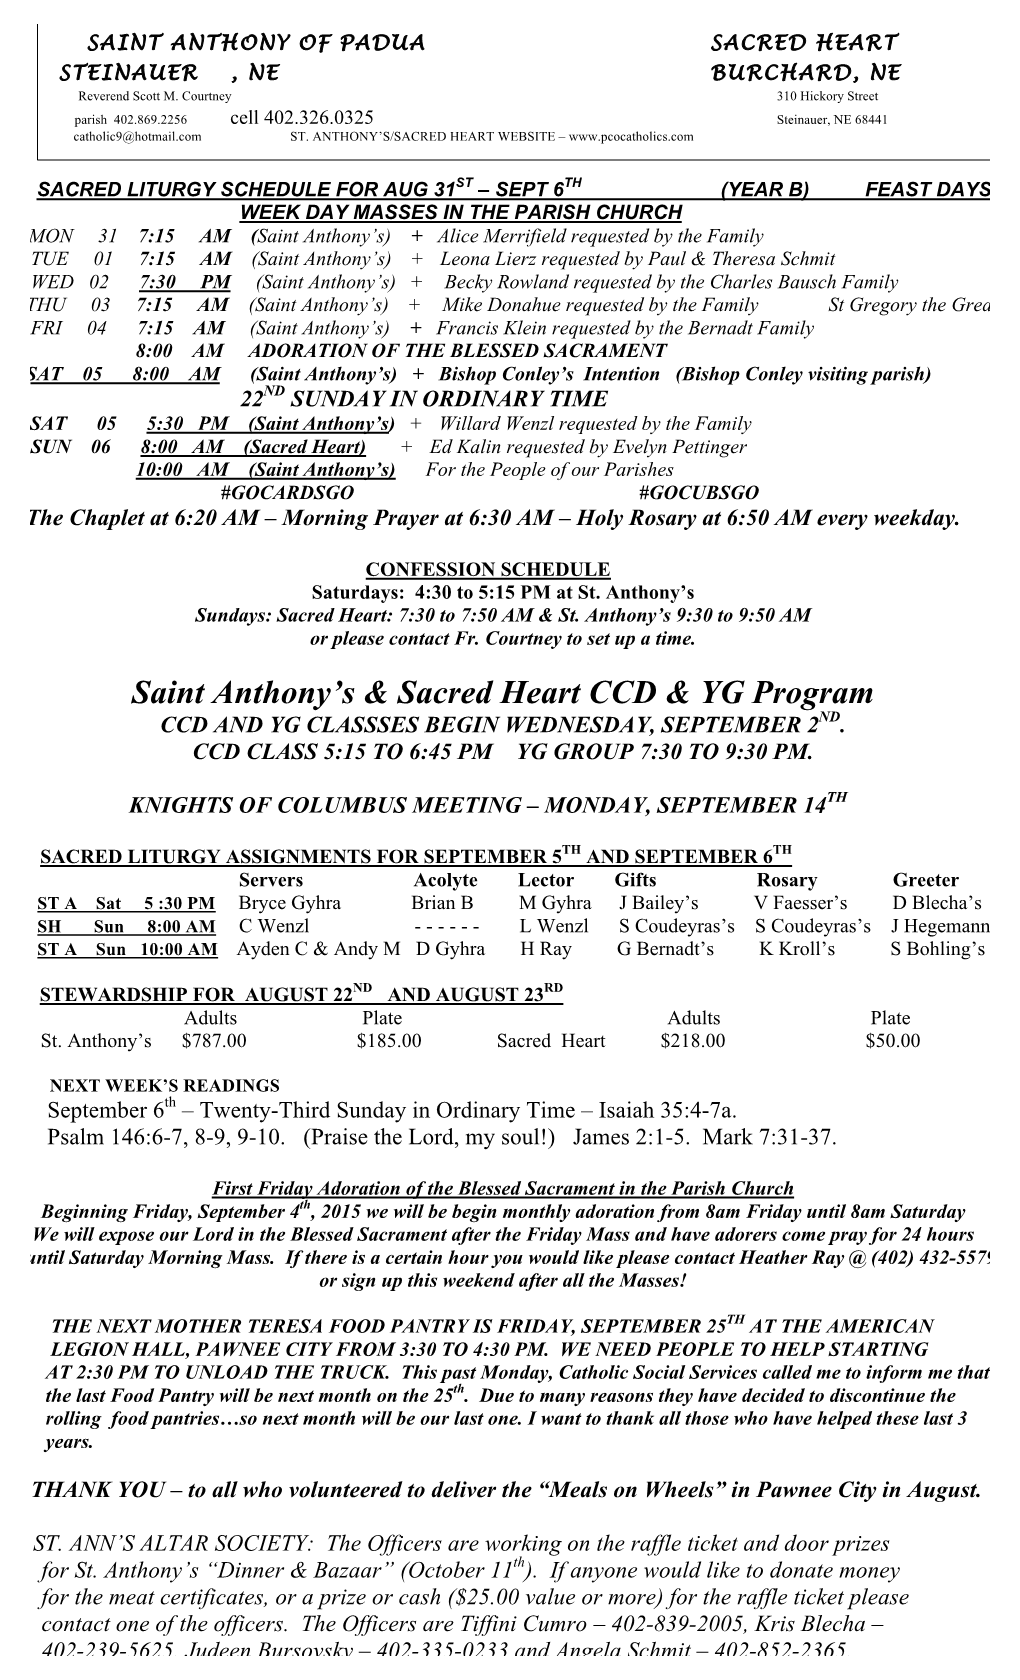 Saint Anthony's & Sacred Heart CCD & YG Program